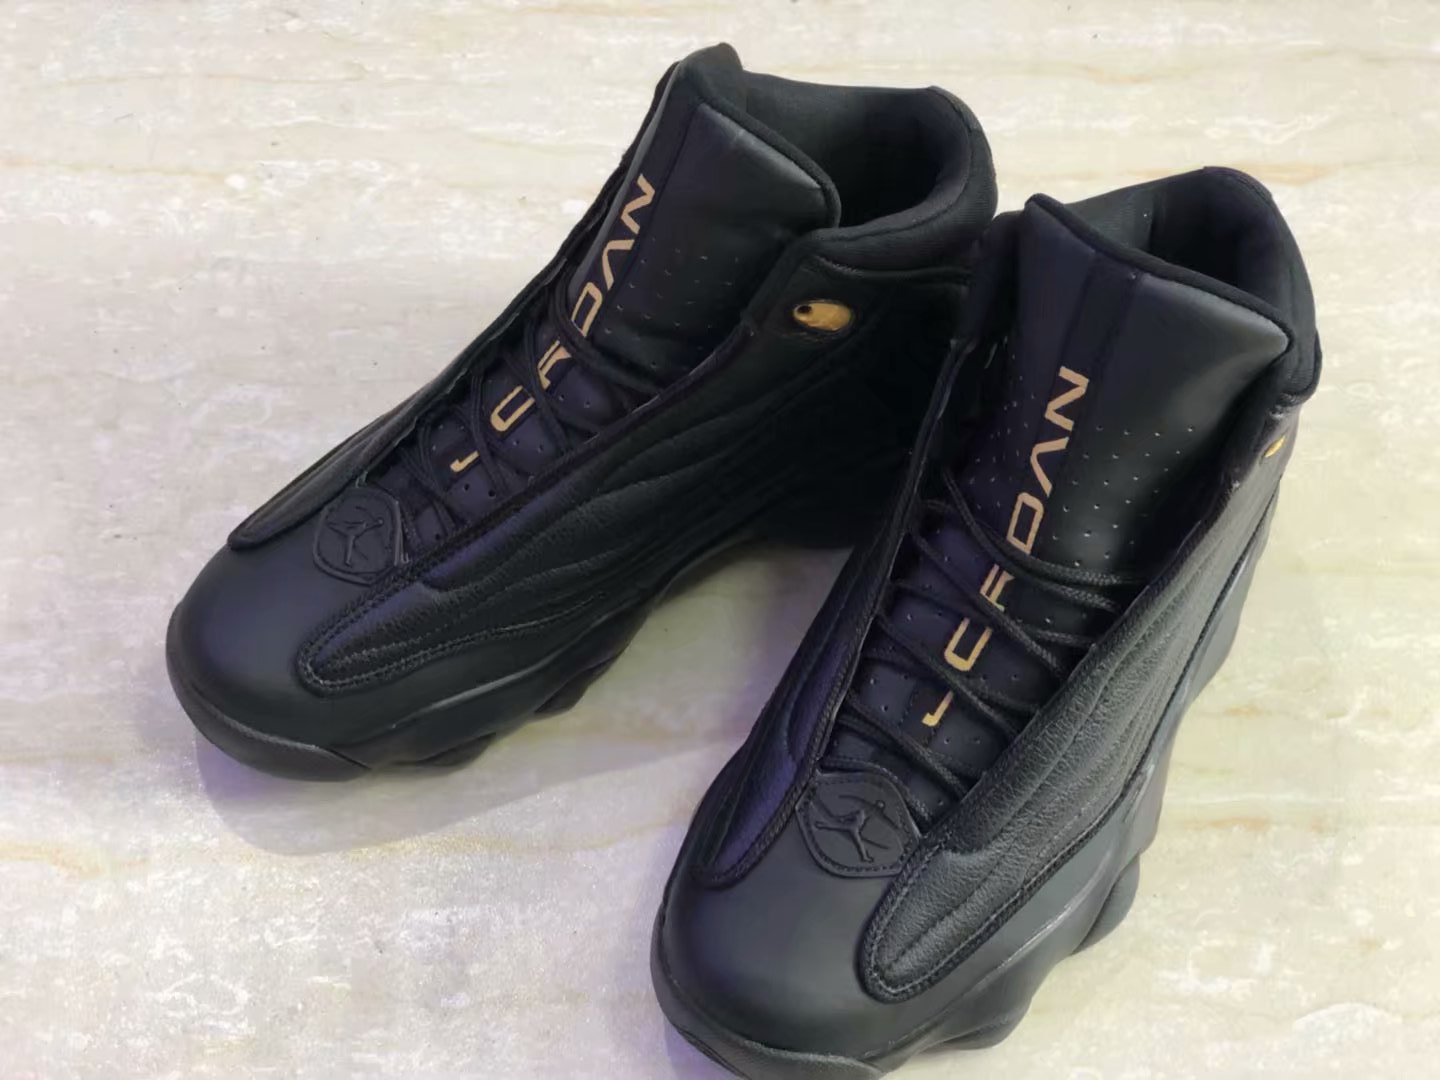 New Air Jordan 13.5 All Black Shoes